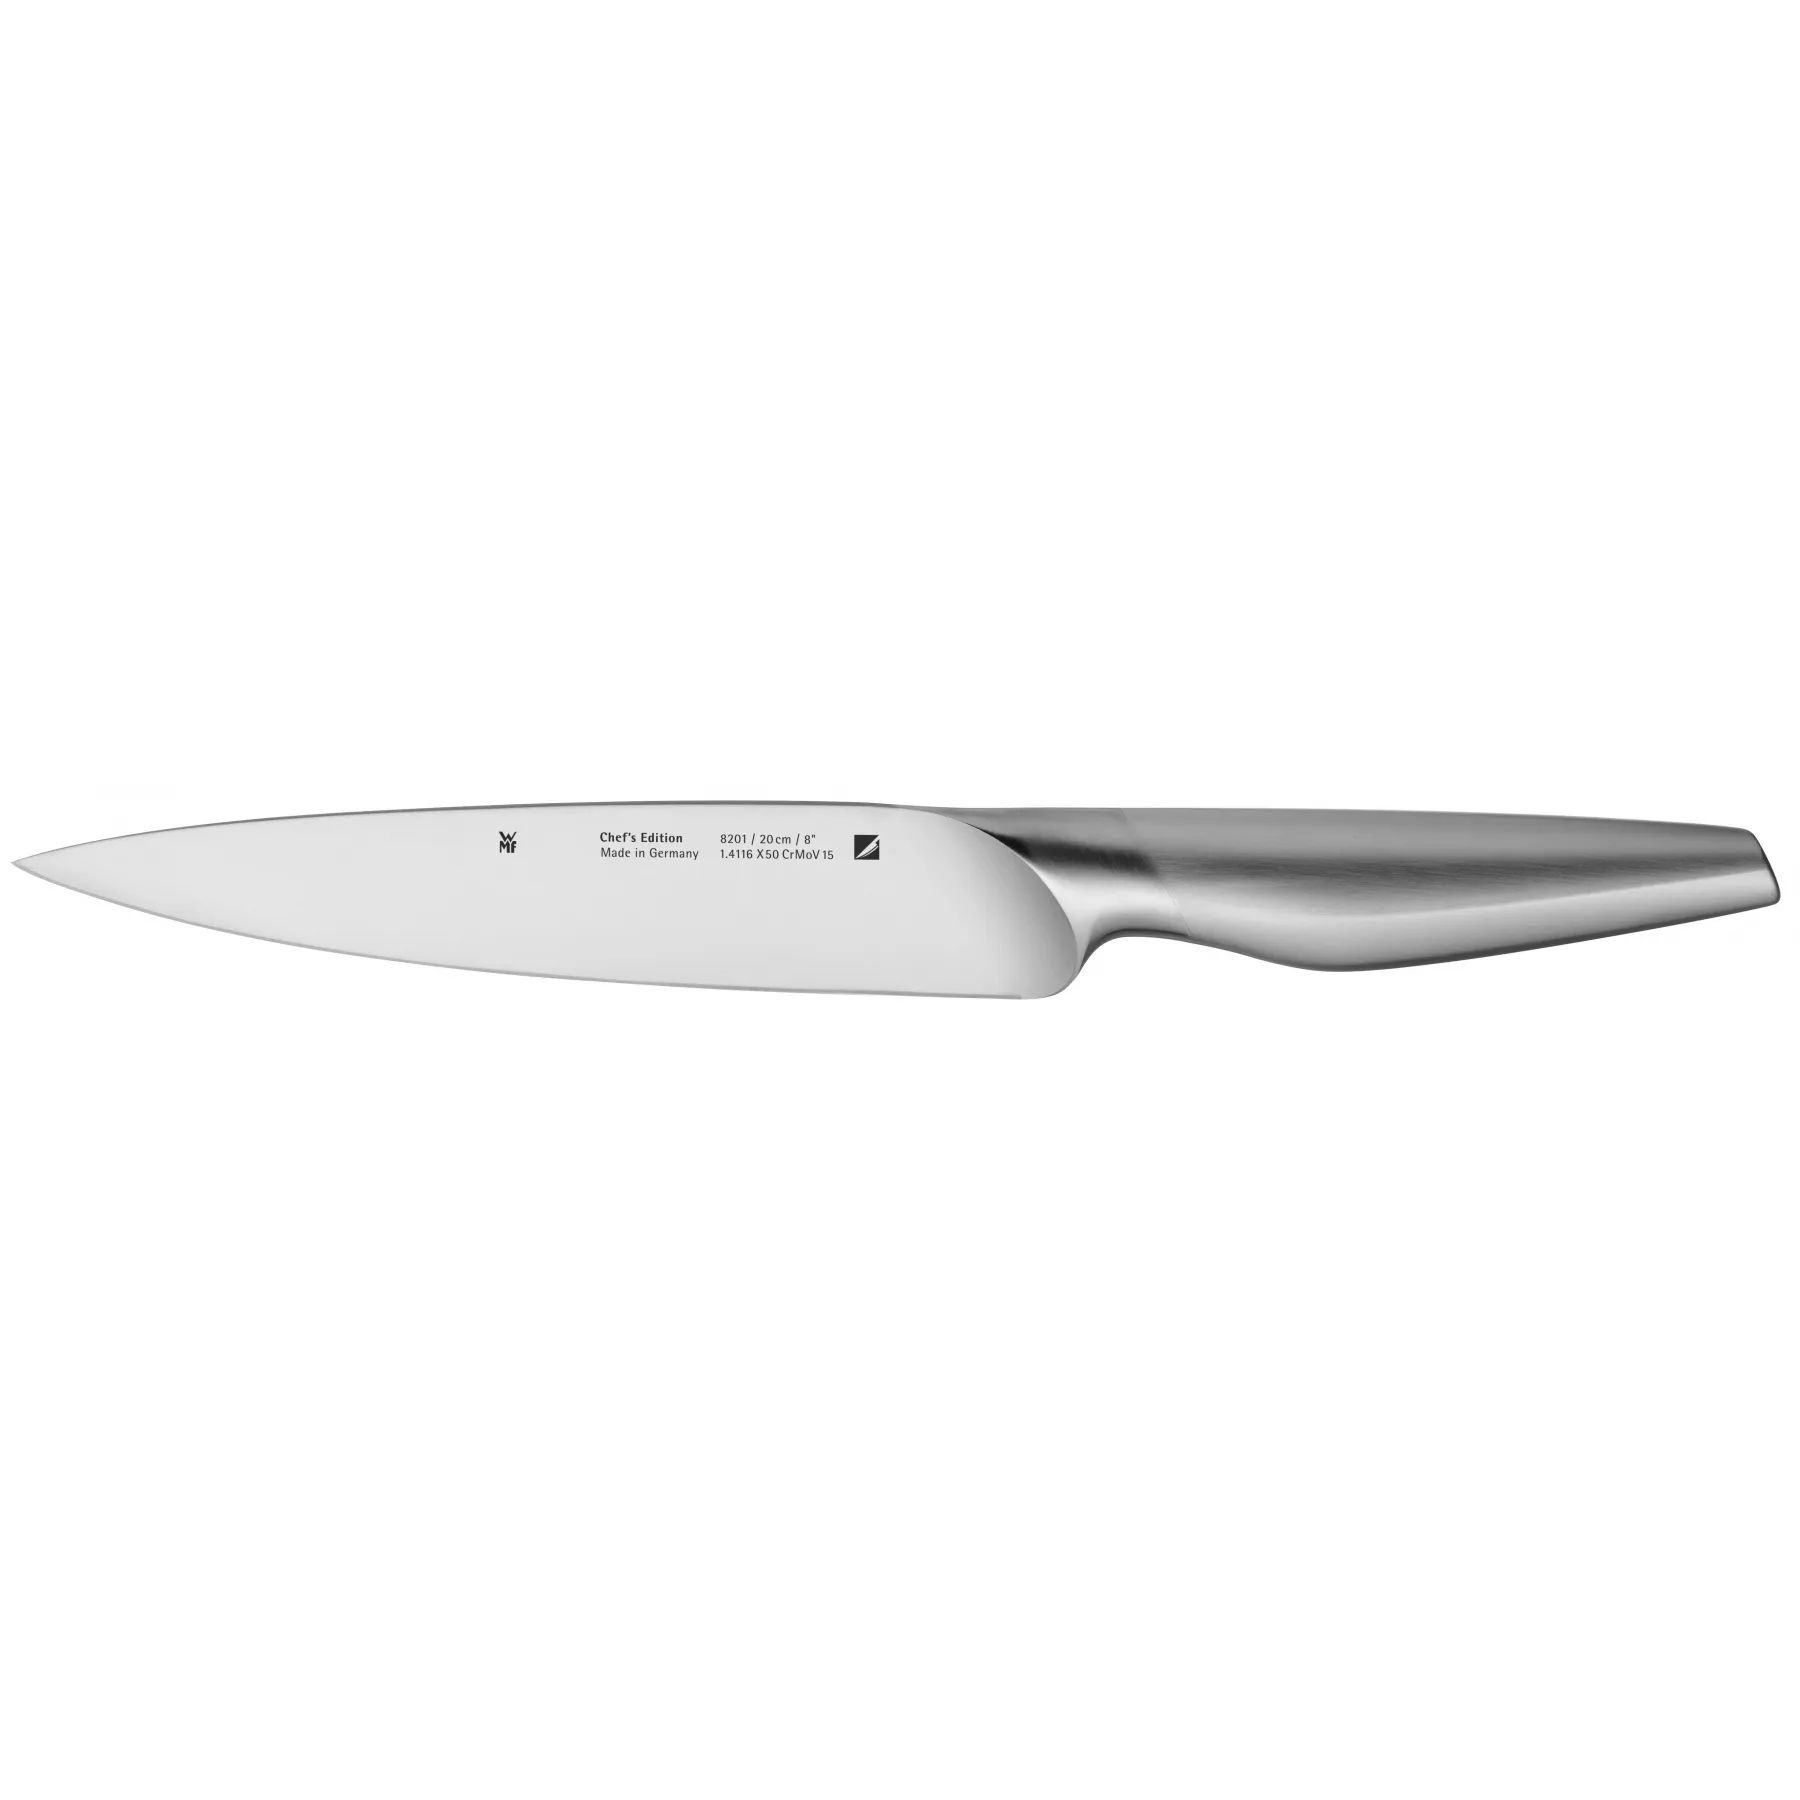 Кухонные ножи 20 см. Нож Chef Knife 20cm. Chef Knife ножи 20 см. Шеф нож Гипфел. Vinzer 1.14116 x50crmov15 нож поварской.